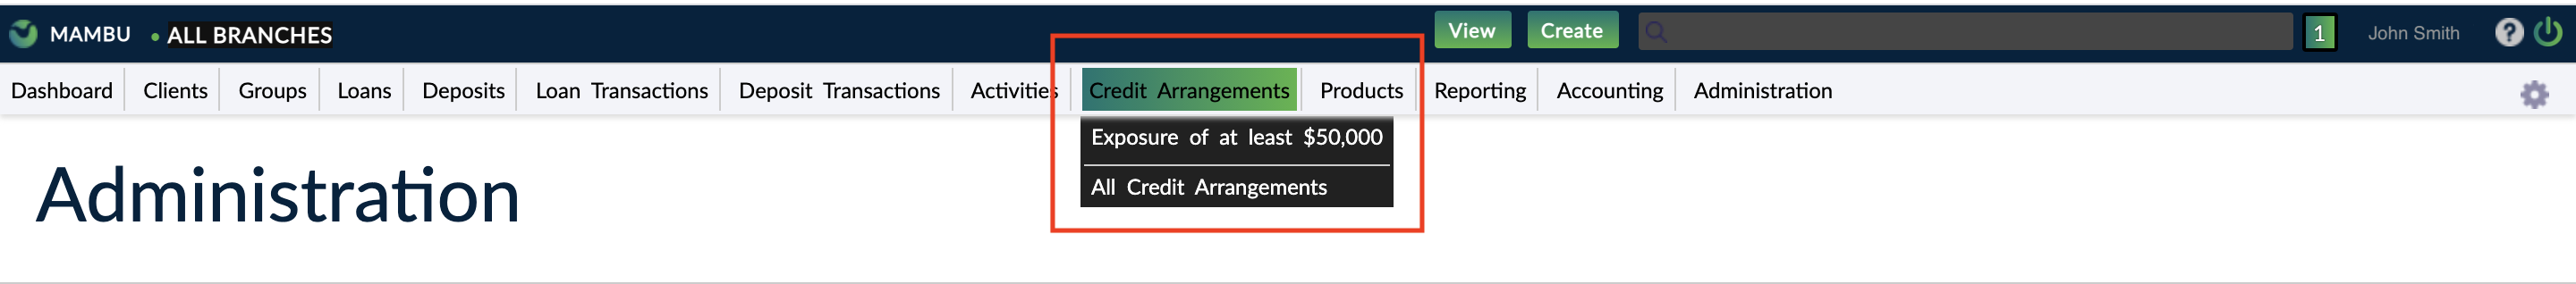 Credit arrangements menu item in navigation bar with a saved custom view